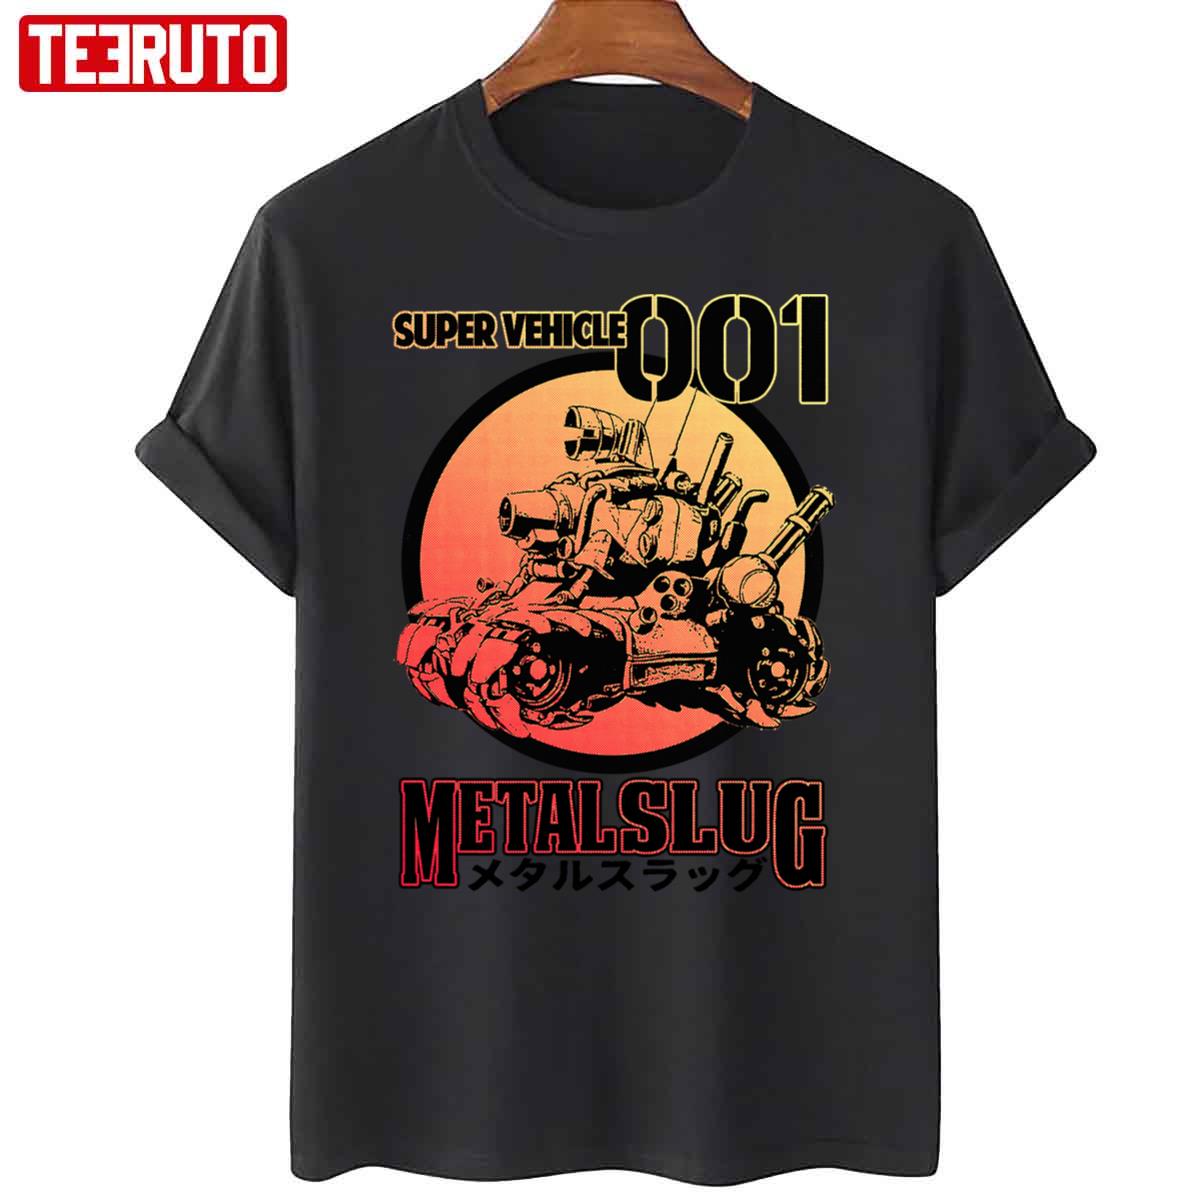 The Original Super Vehicle 001 Metal Slug Unisex T-Shirt